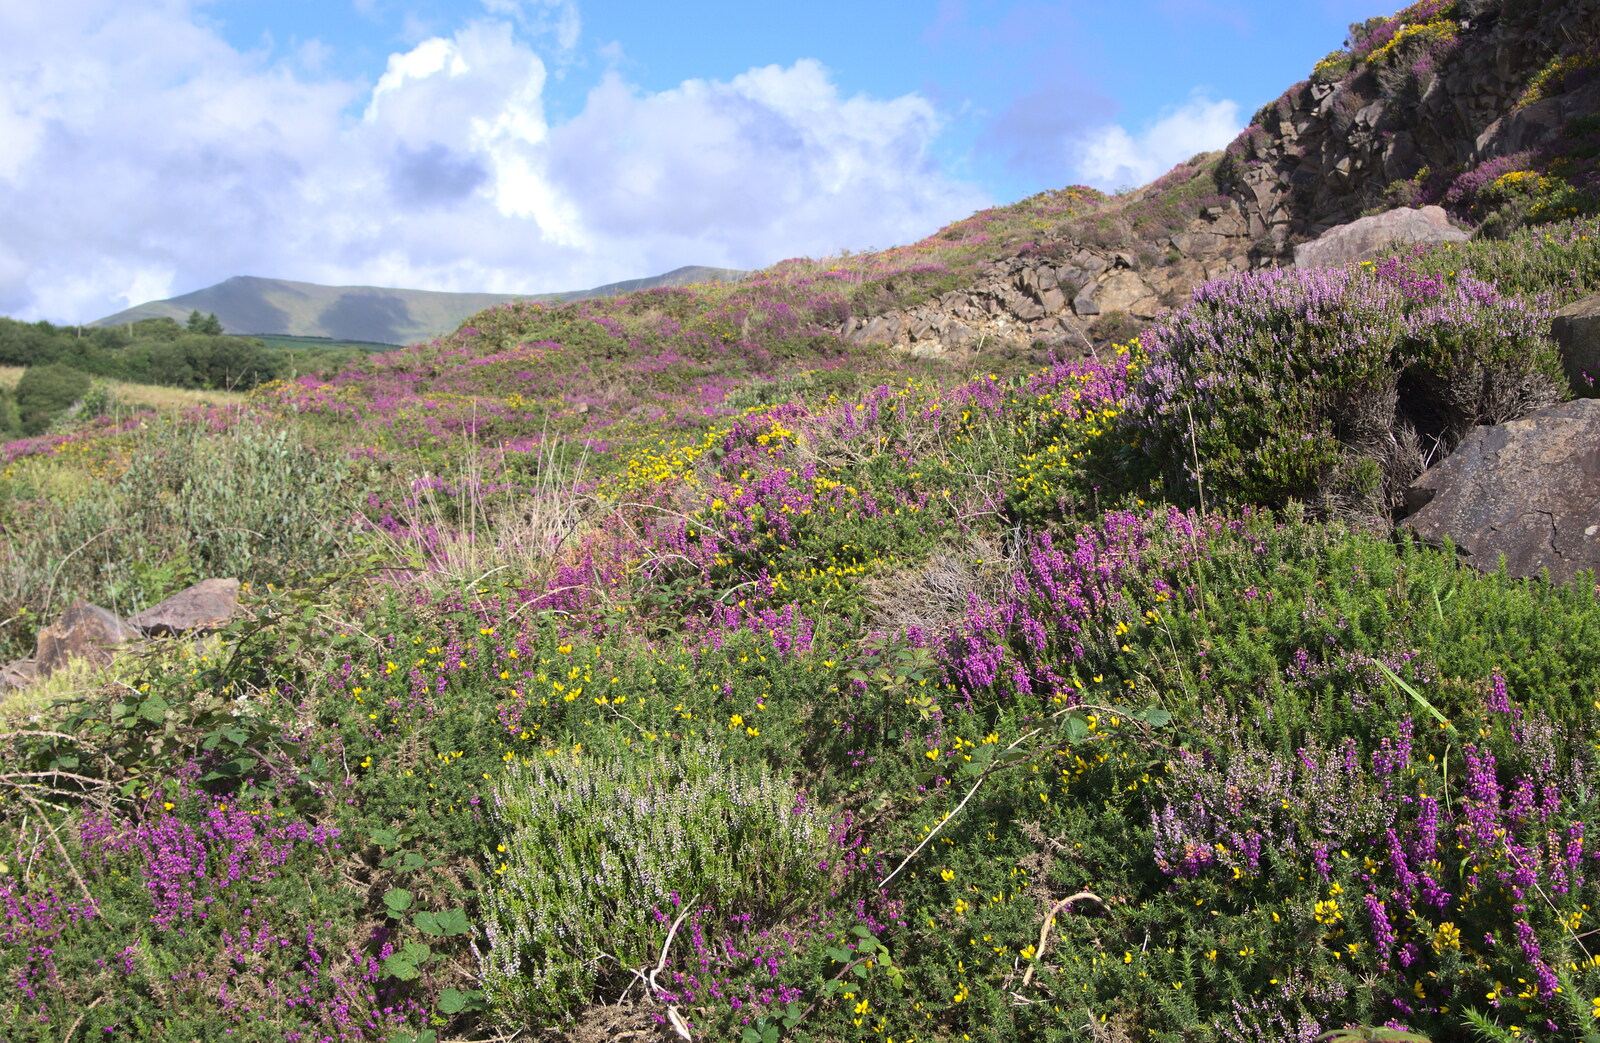 Colourful flowers in the cliffs from Minard Beach and Ceol Agus Craic, Lios Póil, Kerry - 6th August 2017